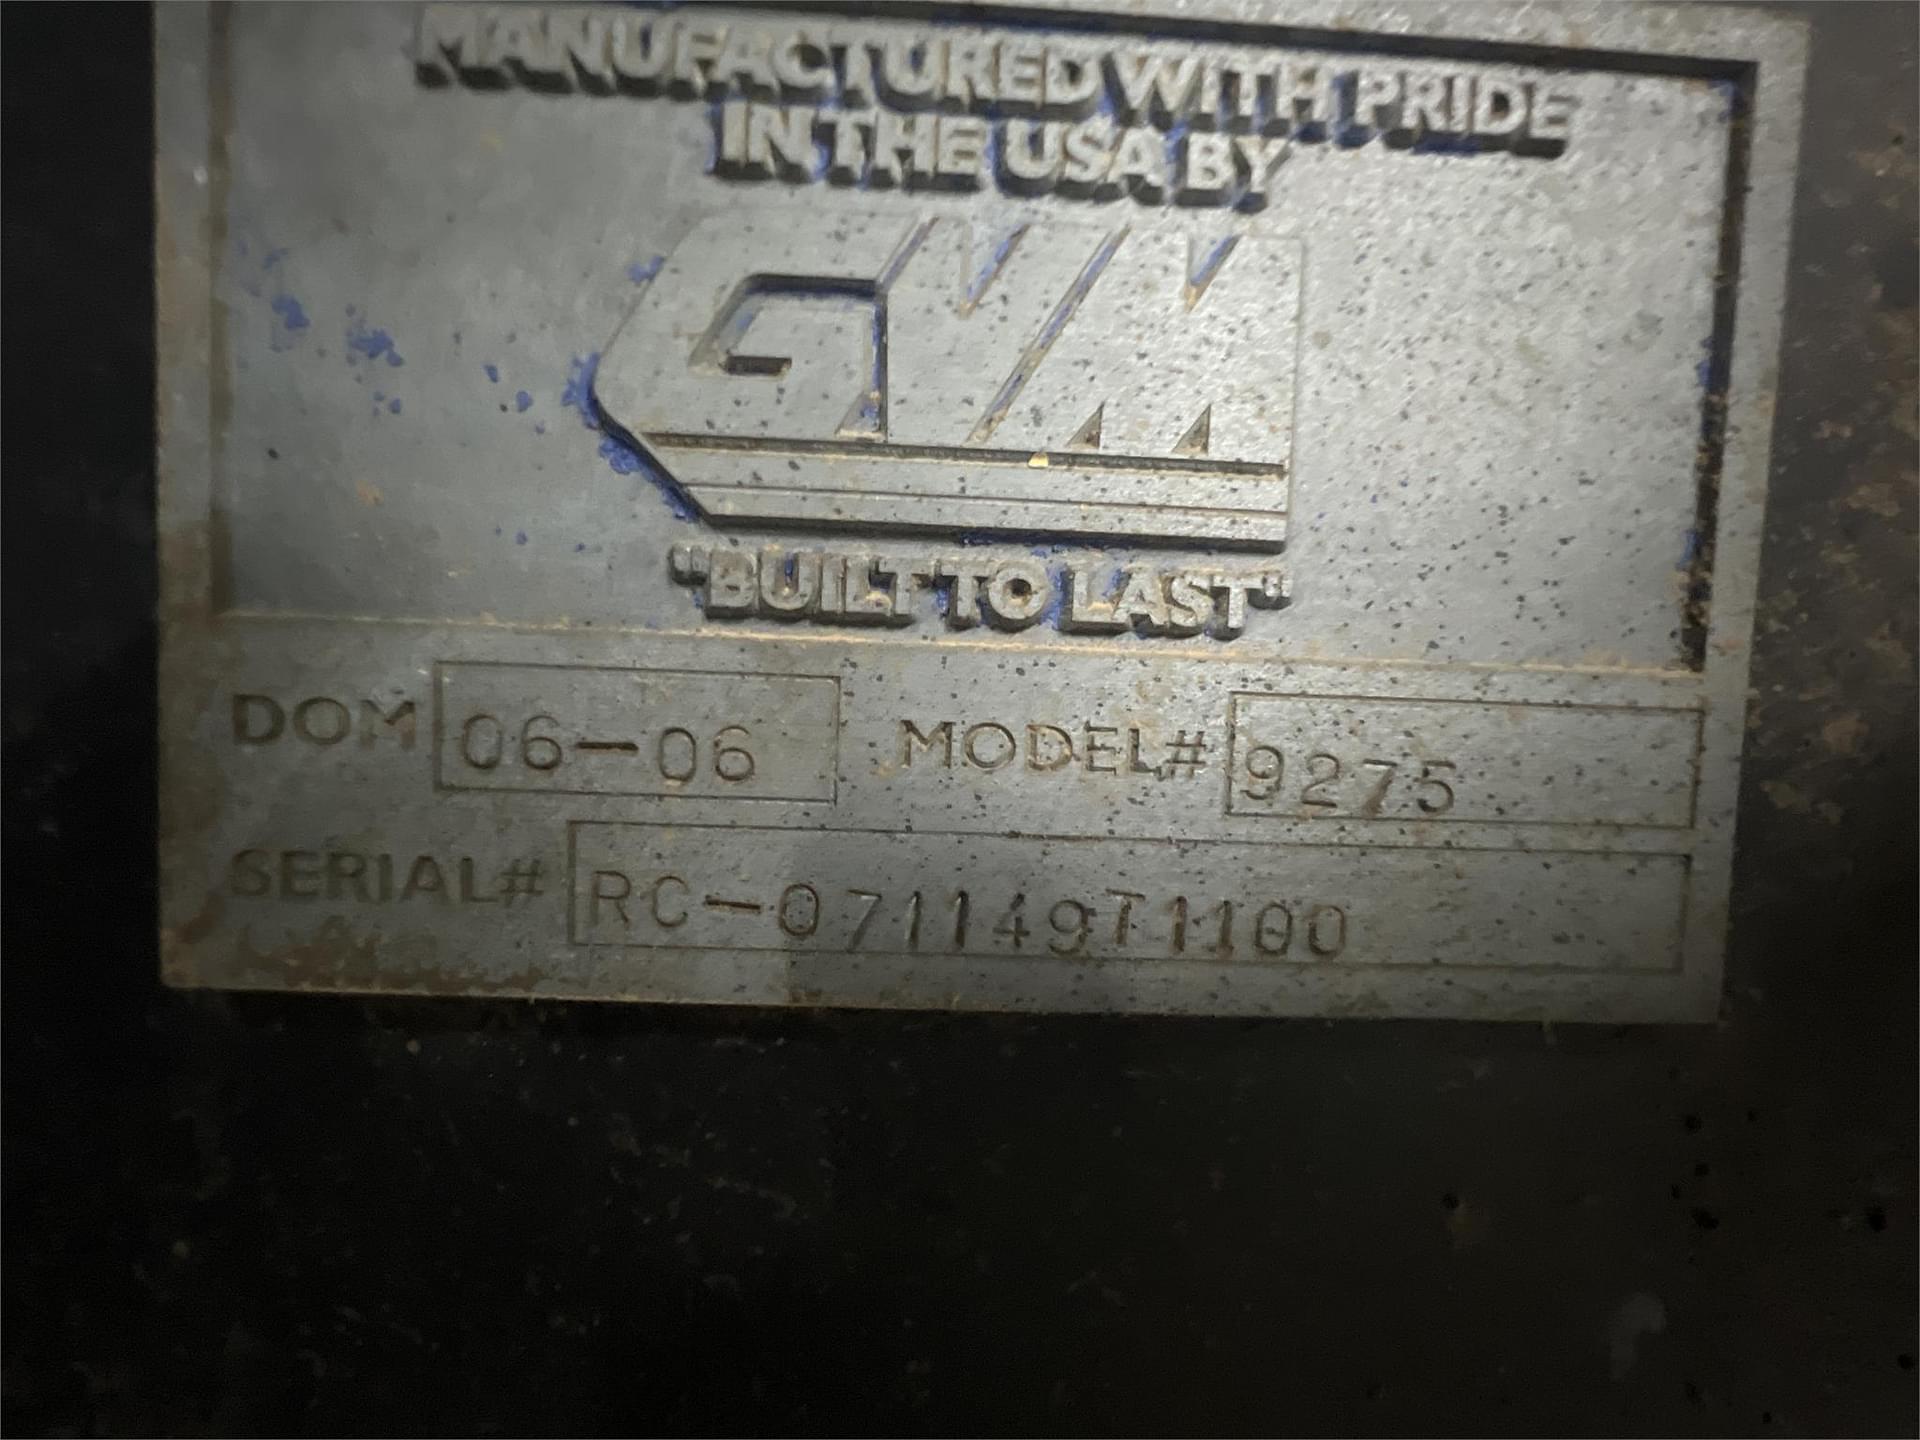 Main image GVM Prowler 9275 15